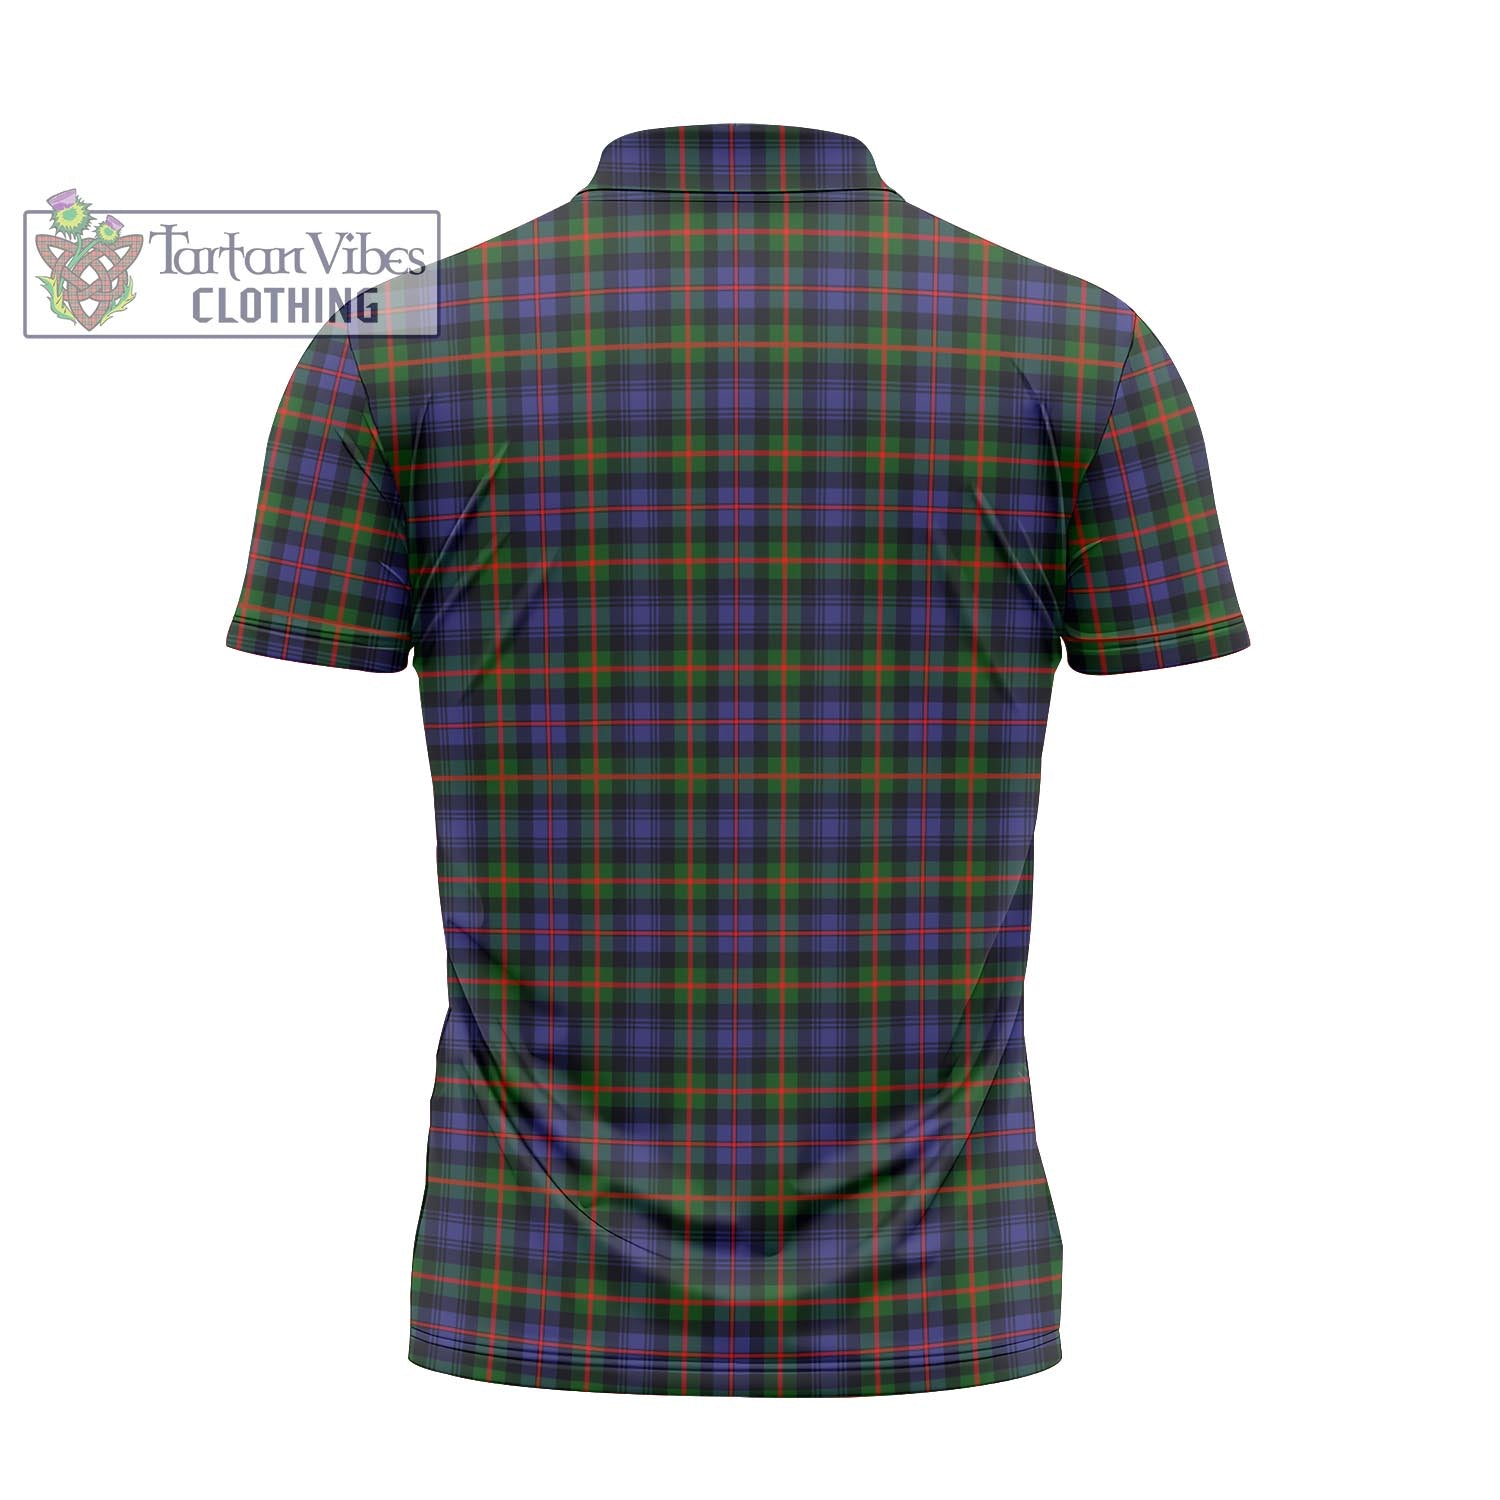 Tartan Vibes Clothing Fleming Tartan Zipper Polo Shirt with Family Crest